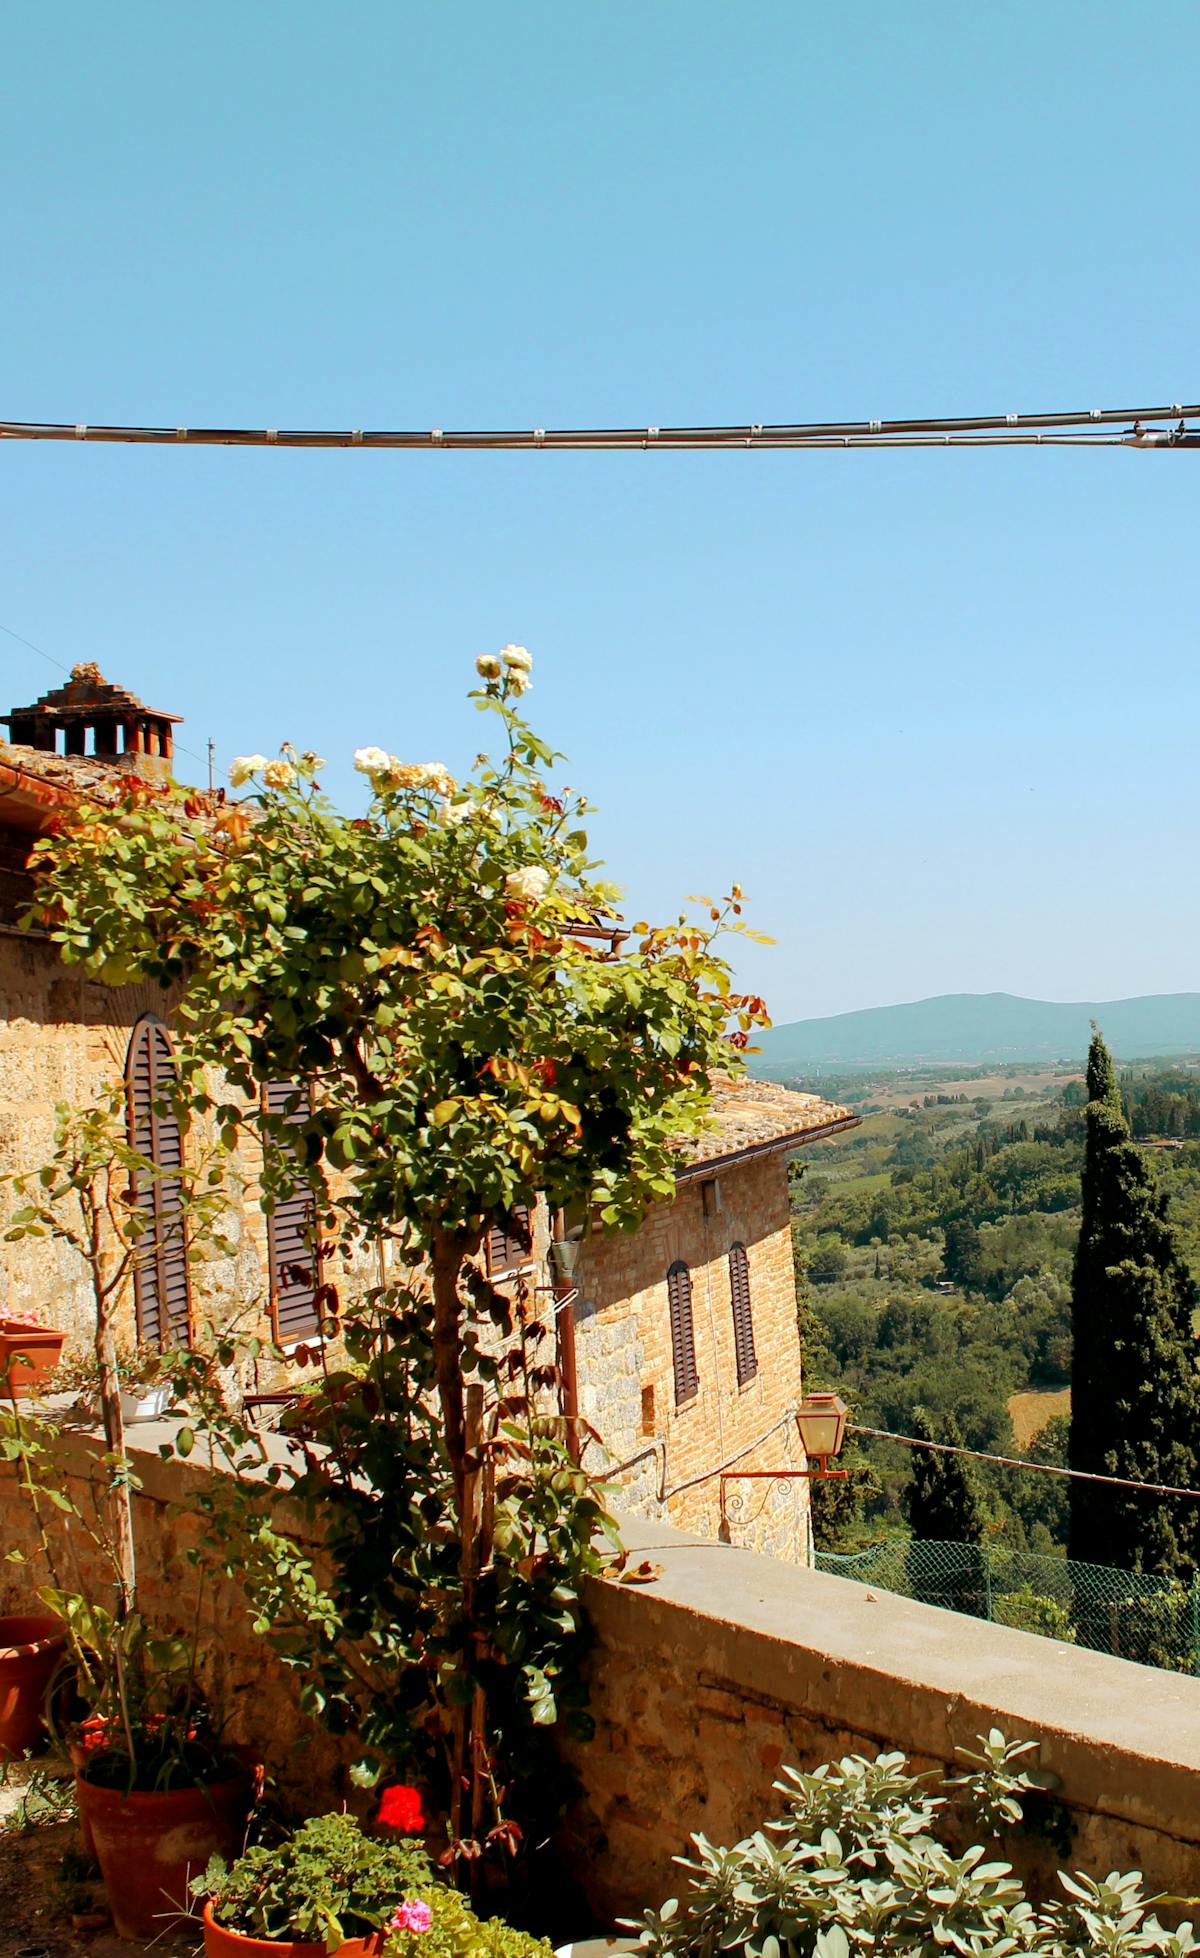 View of an Italian Village